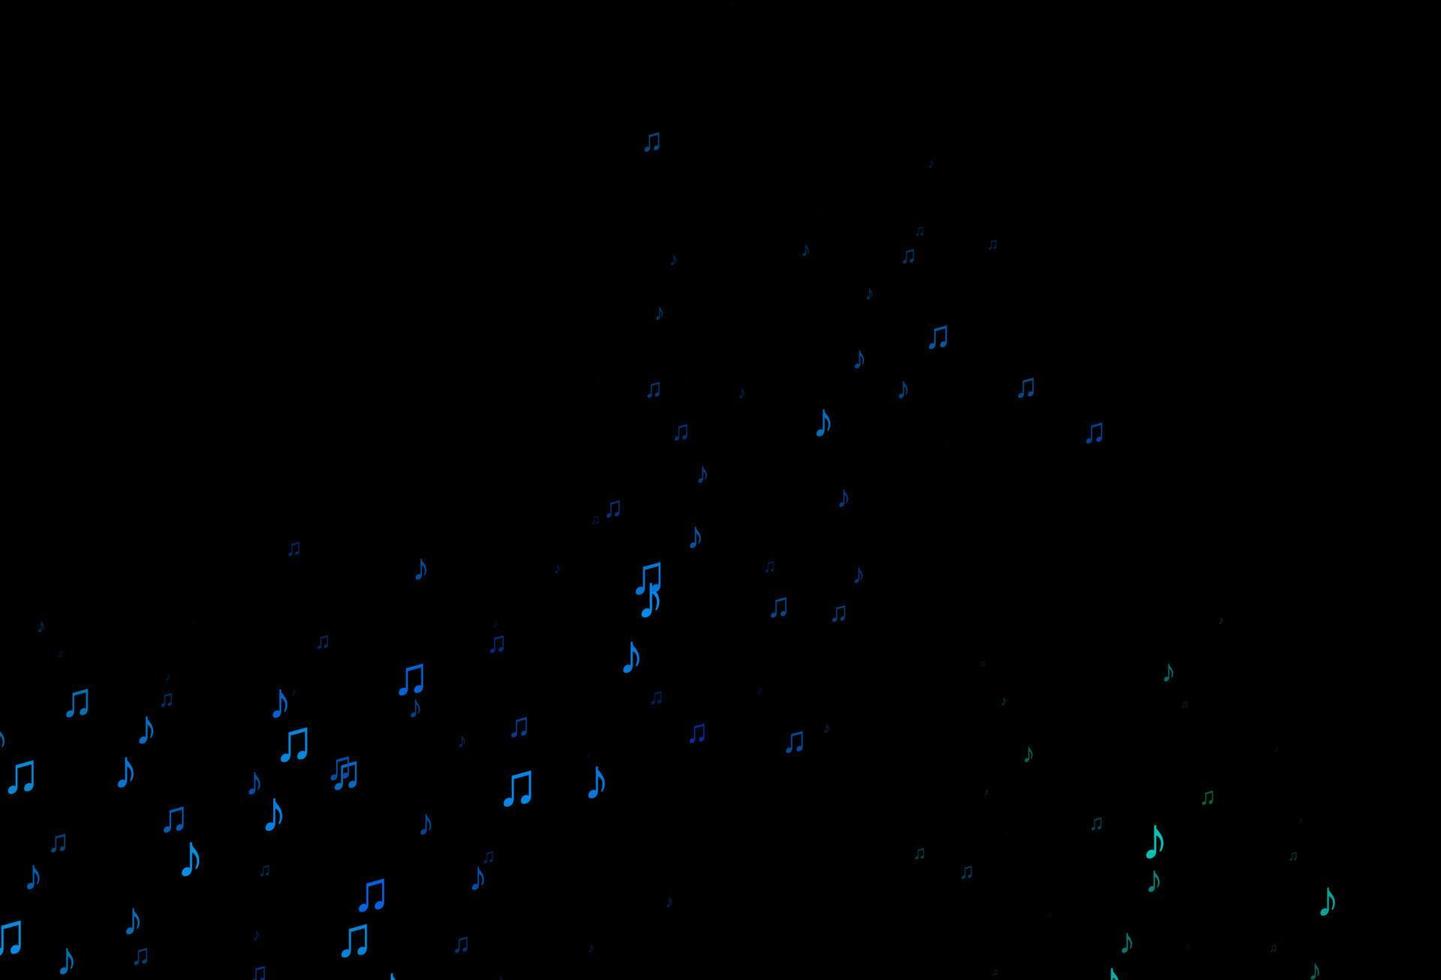 trama vettoriale blu scuro, verde con note musicali.